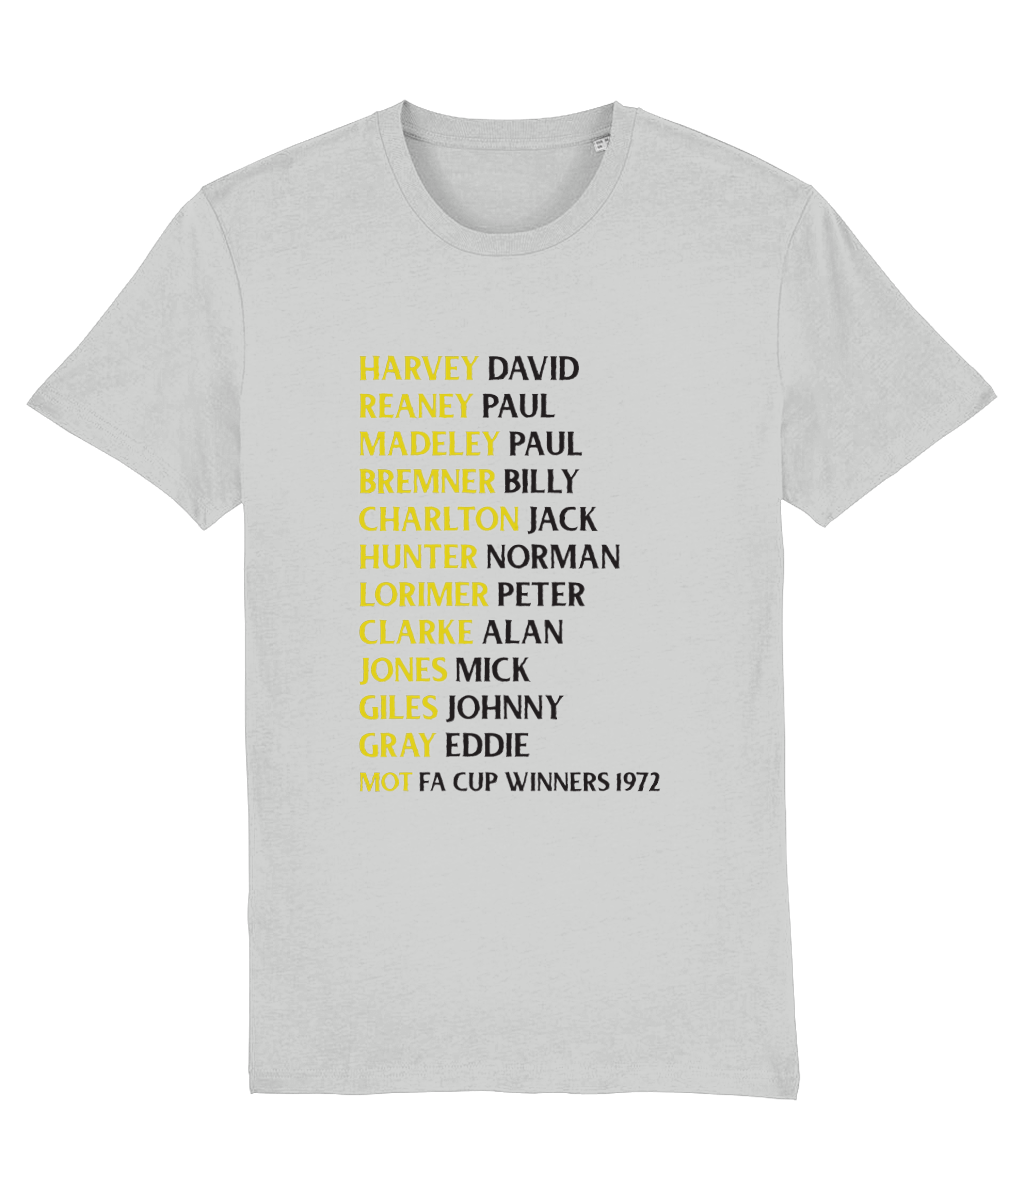 1972 FA Cup Winners T-Shirt Men